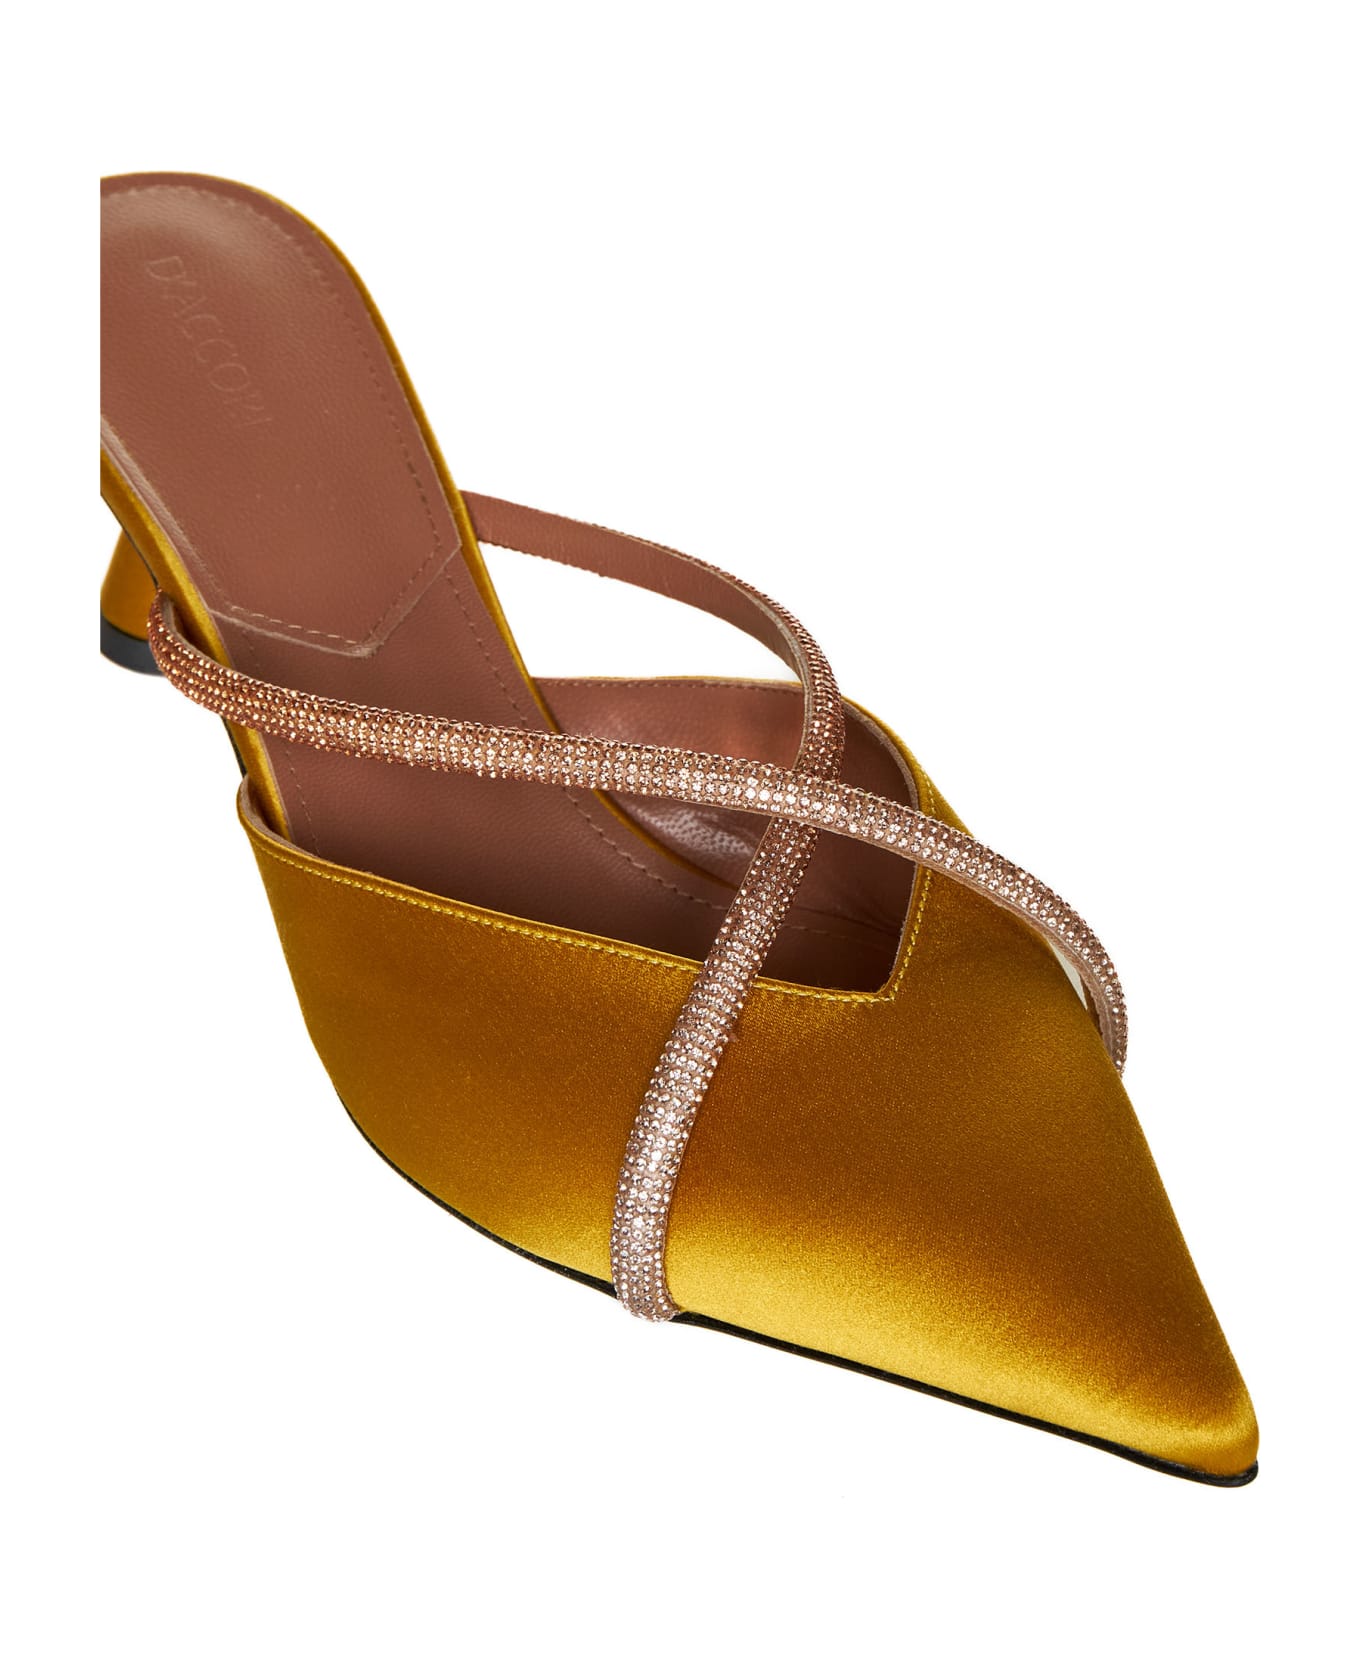 D'Accori Sandals - Hellow yellow